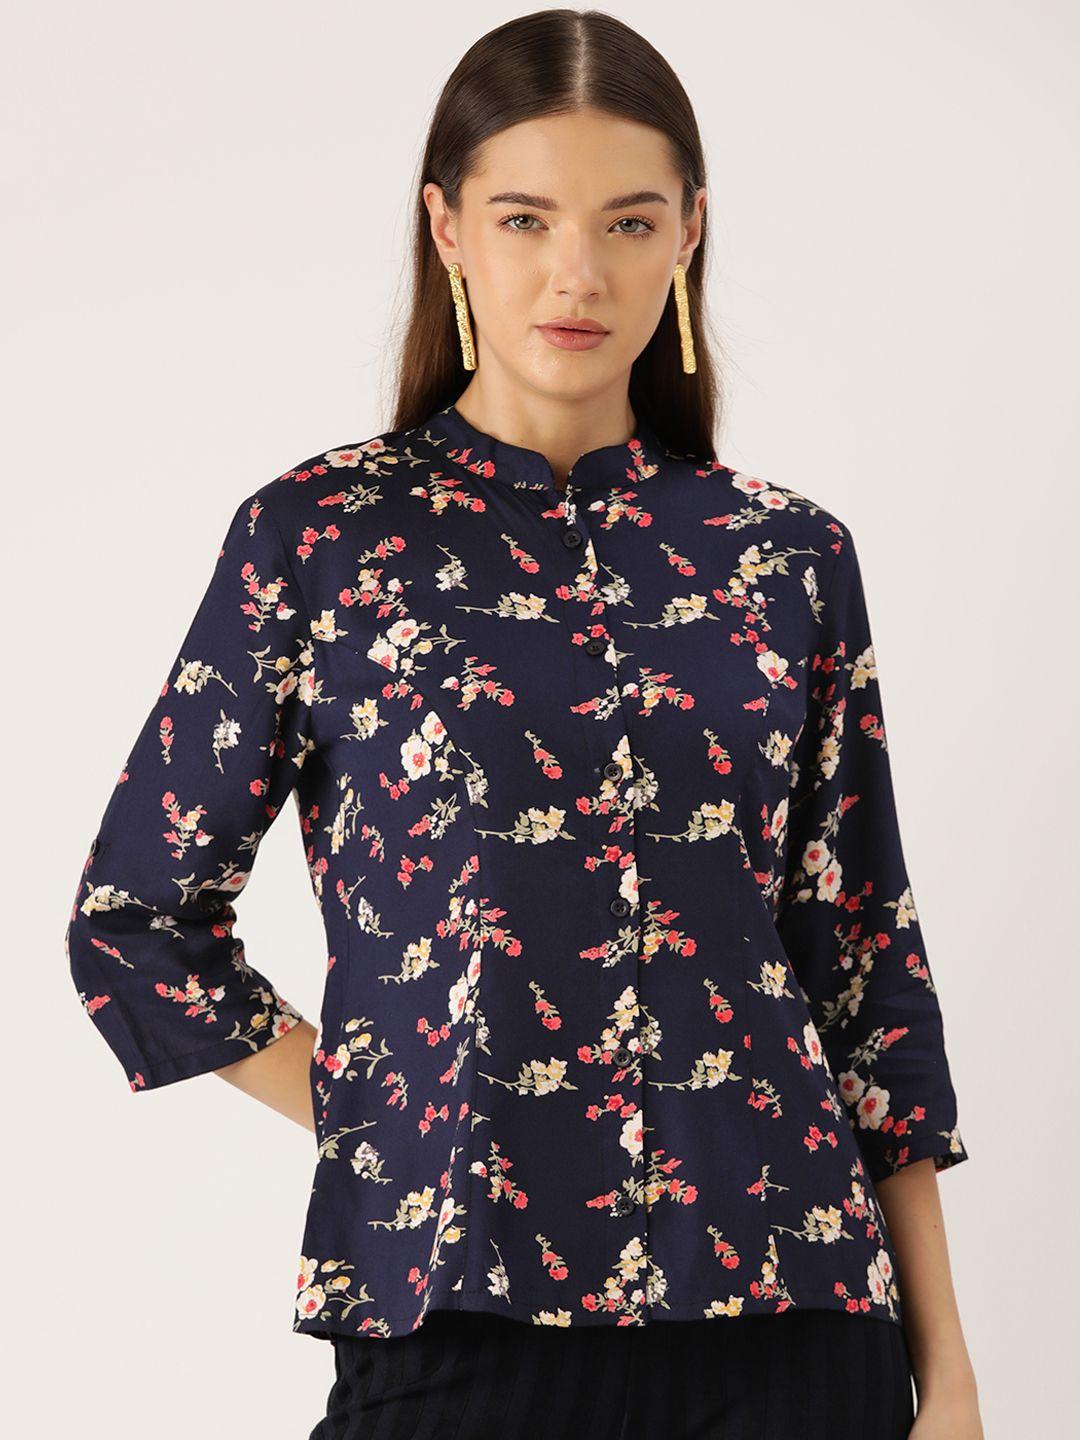 rue collection floral print mandarin collar shirt style top